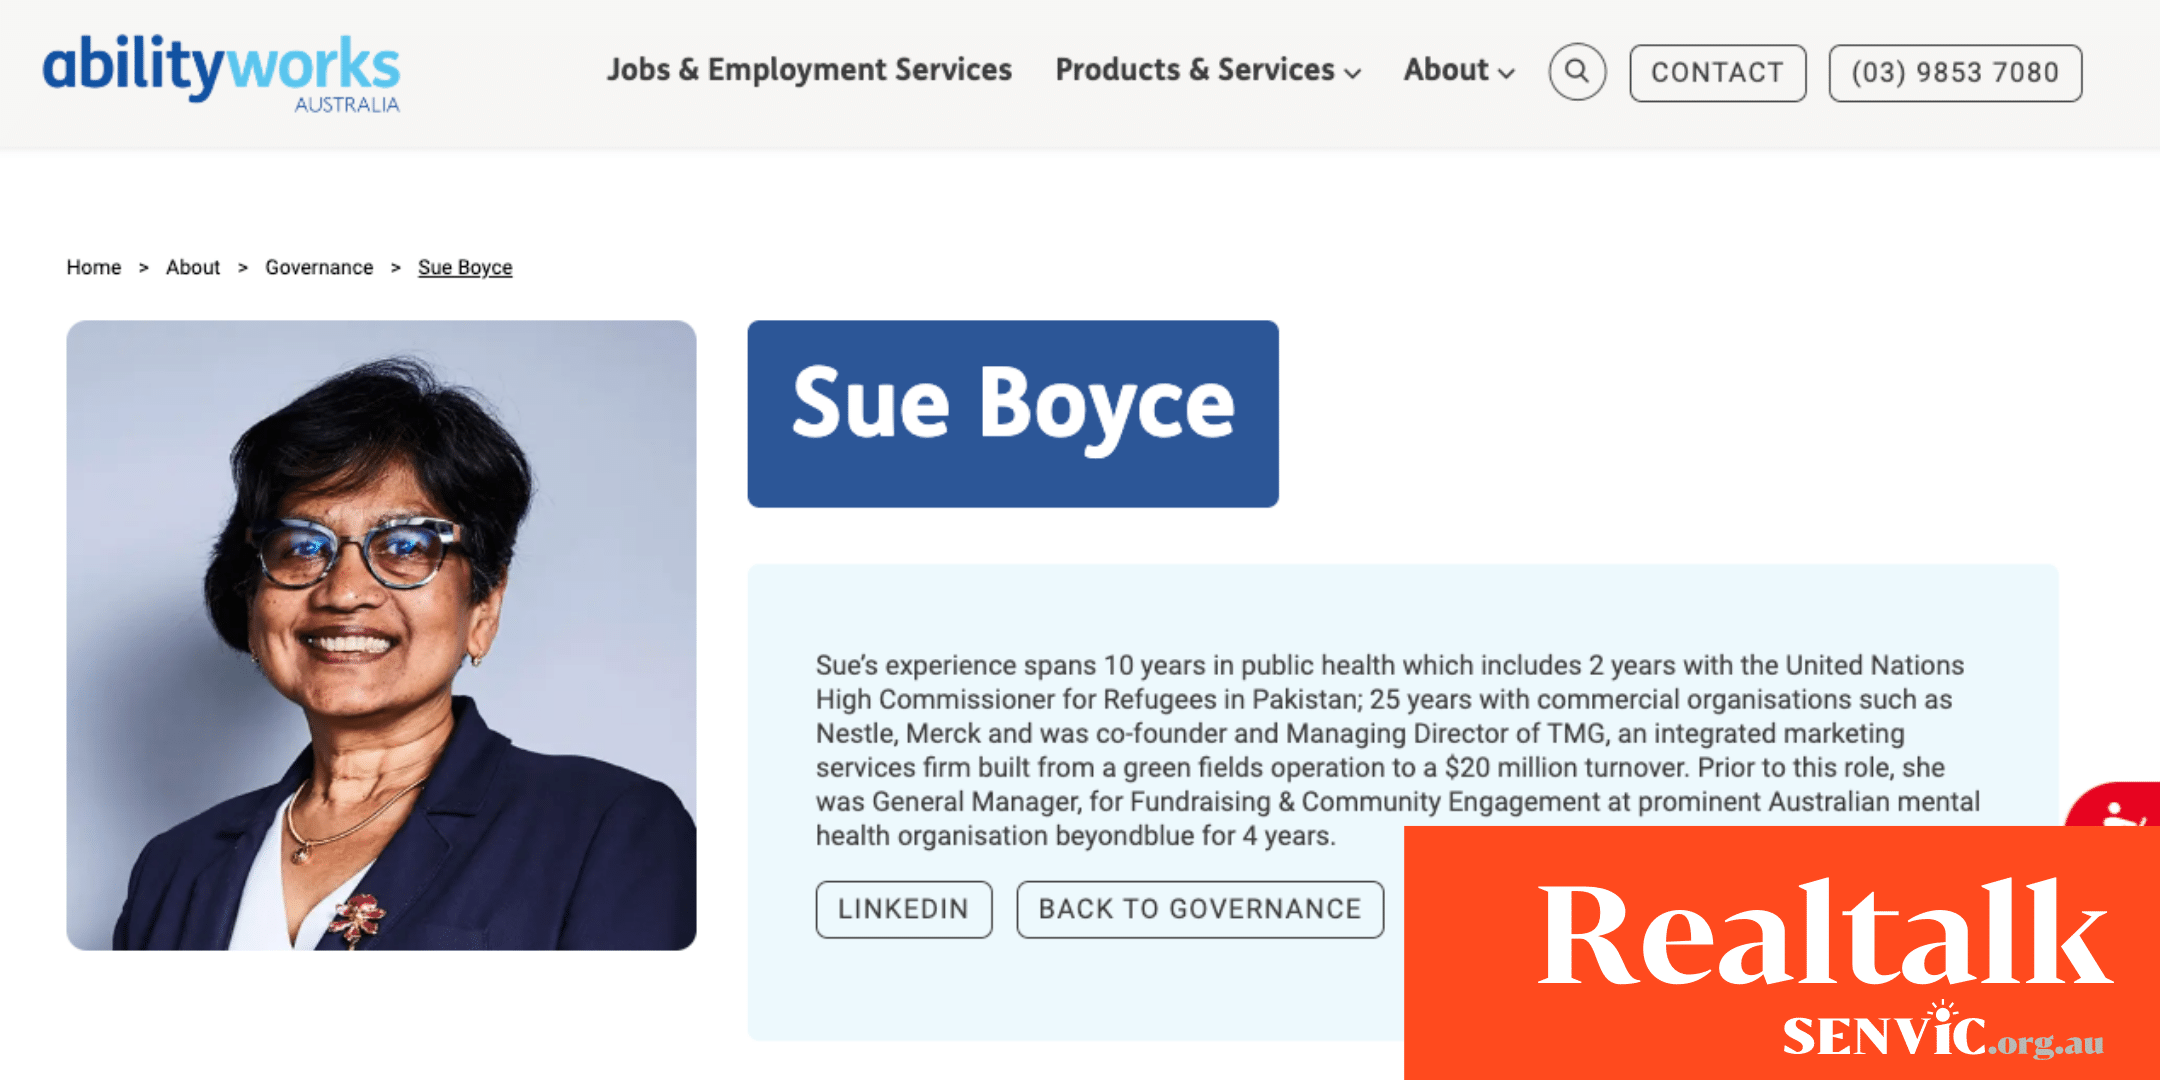 Sue Boyce from Ability Works